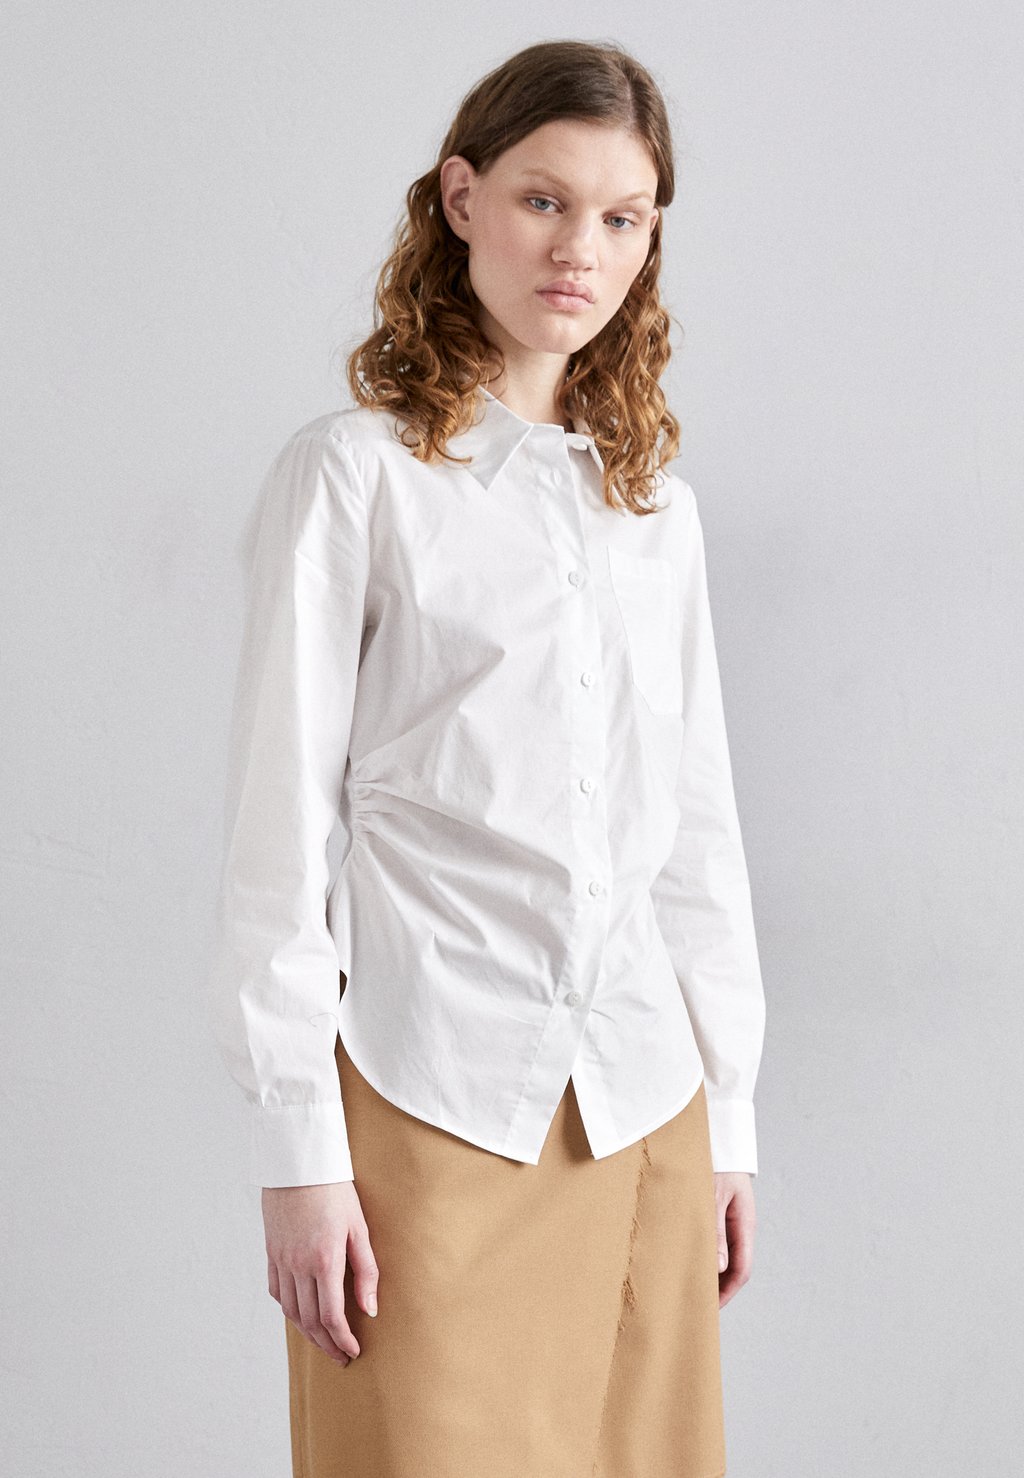 Блузка на пуговицах MARIA Baum und Pferdgarten, белый блузка рубашка majse baum und pferdgarten белый